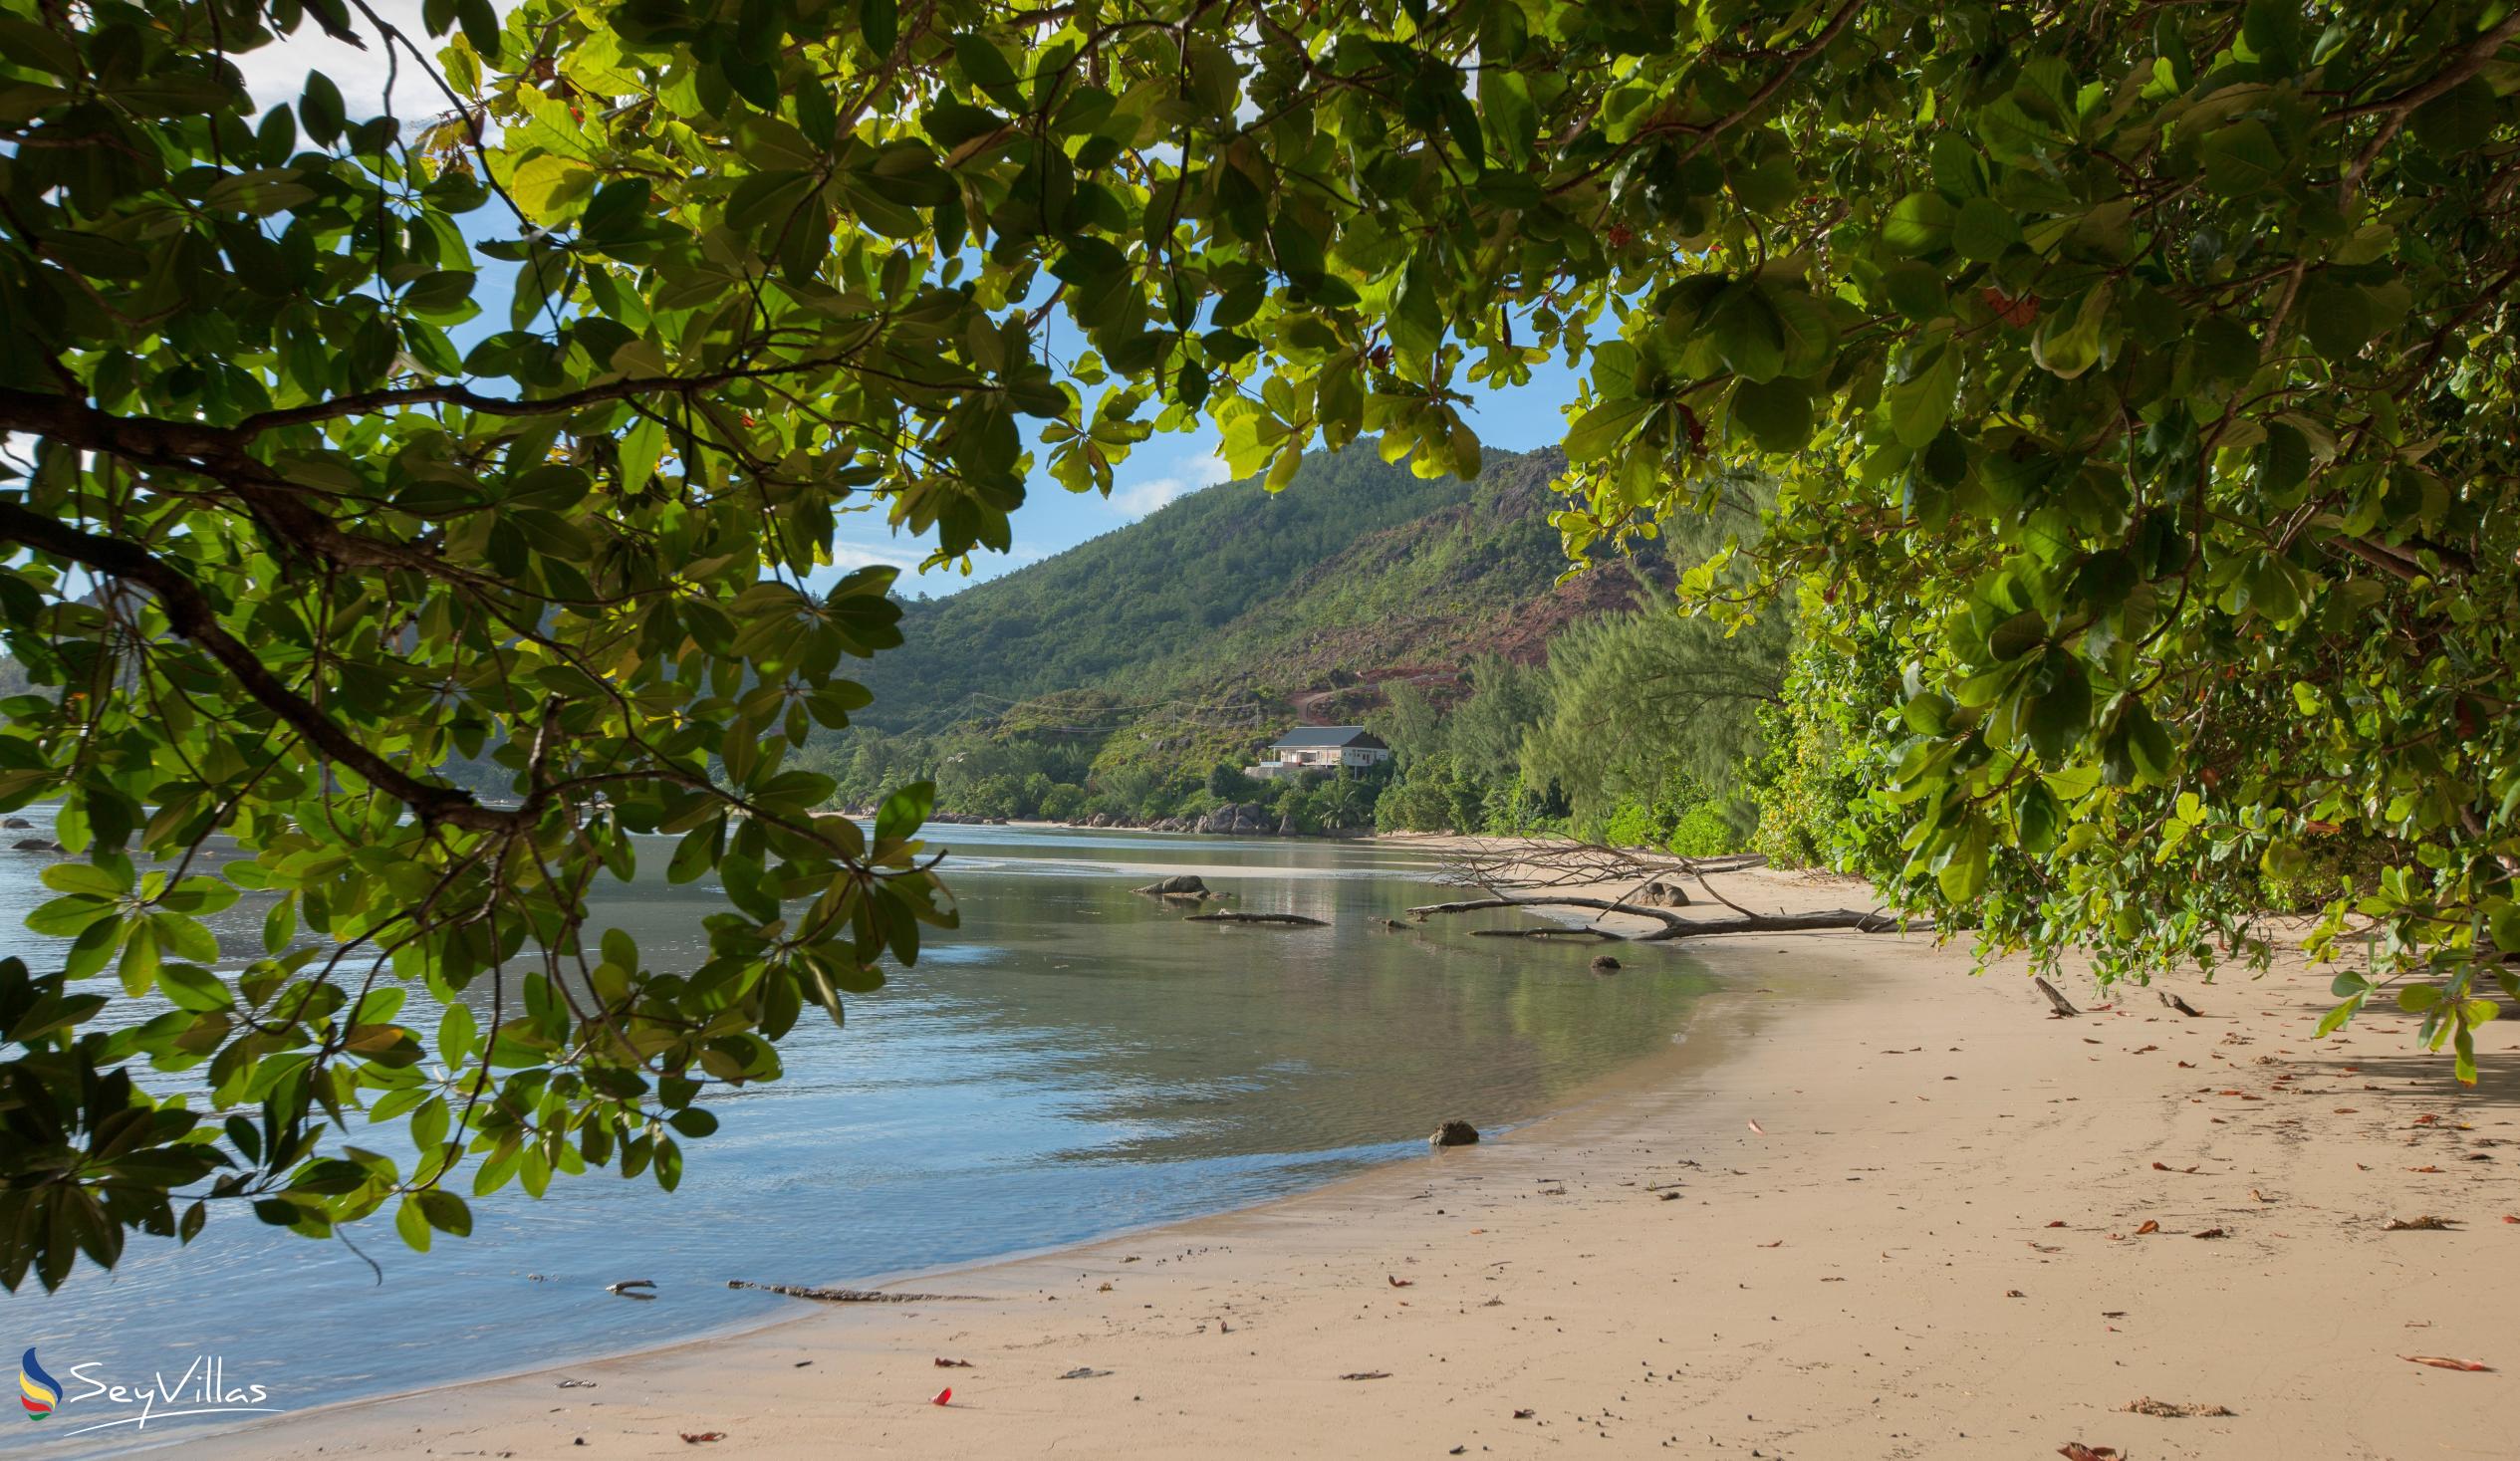 Photo 8: Anse Pasquière - Praslin (Seychelles)